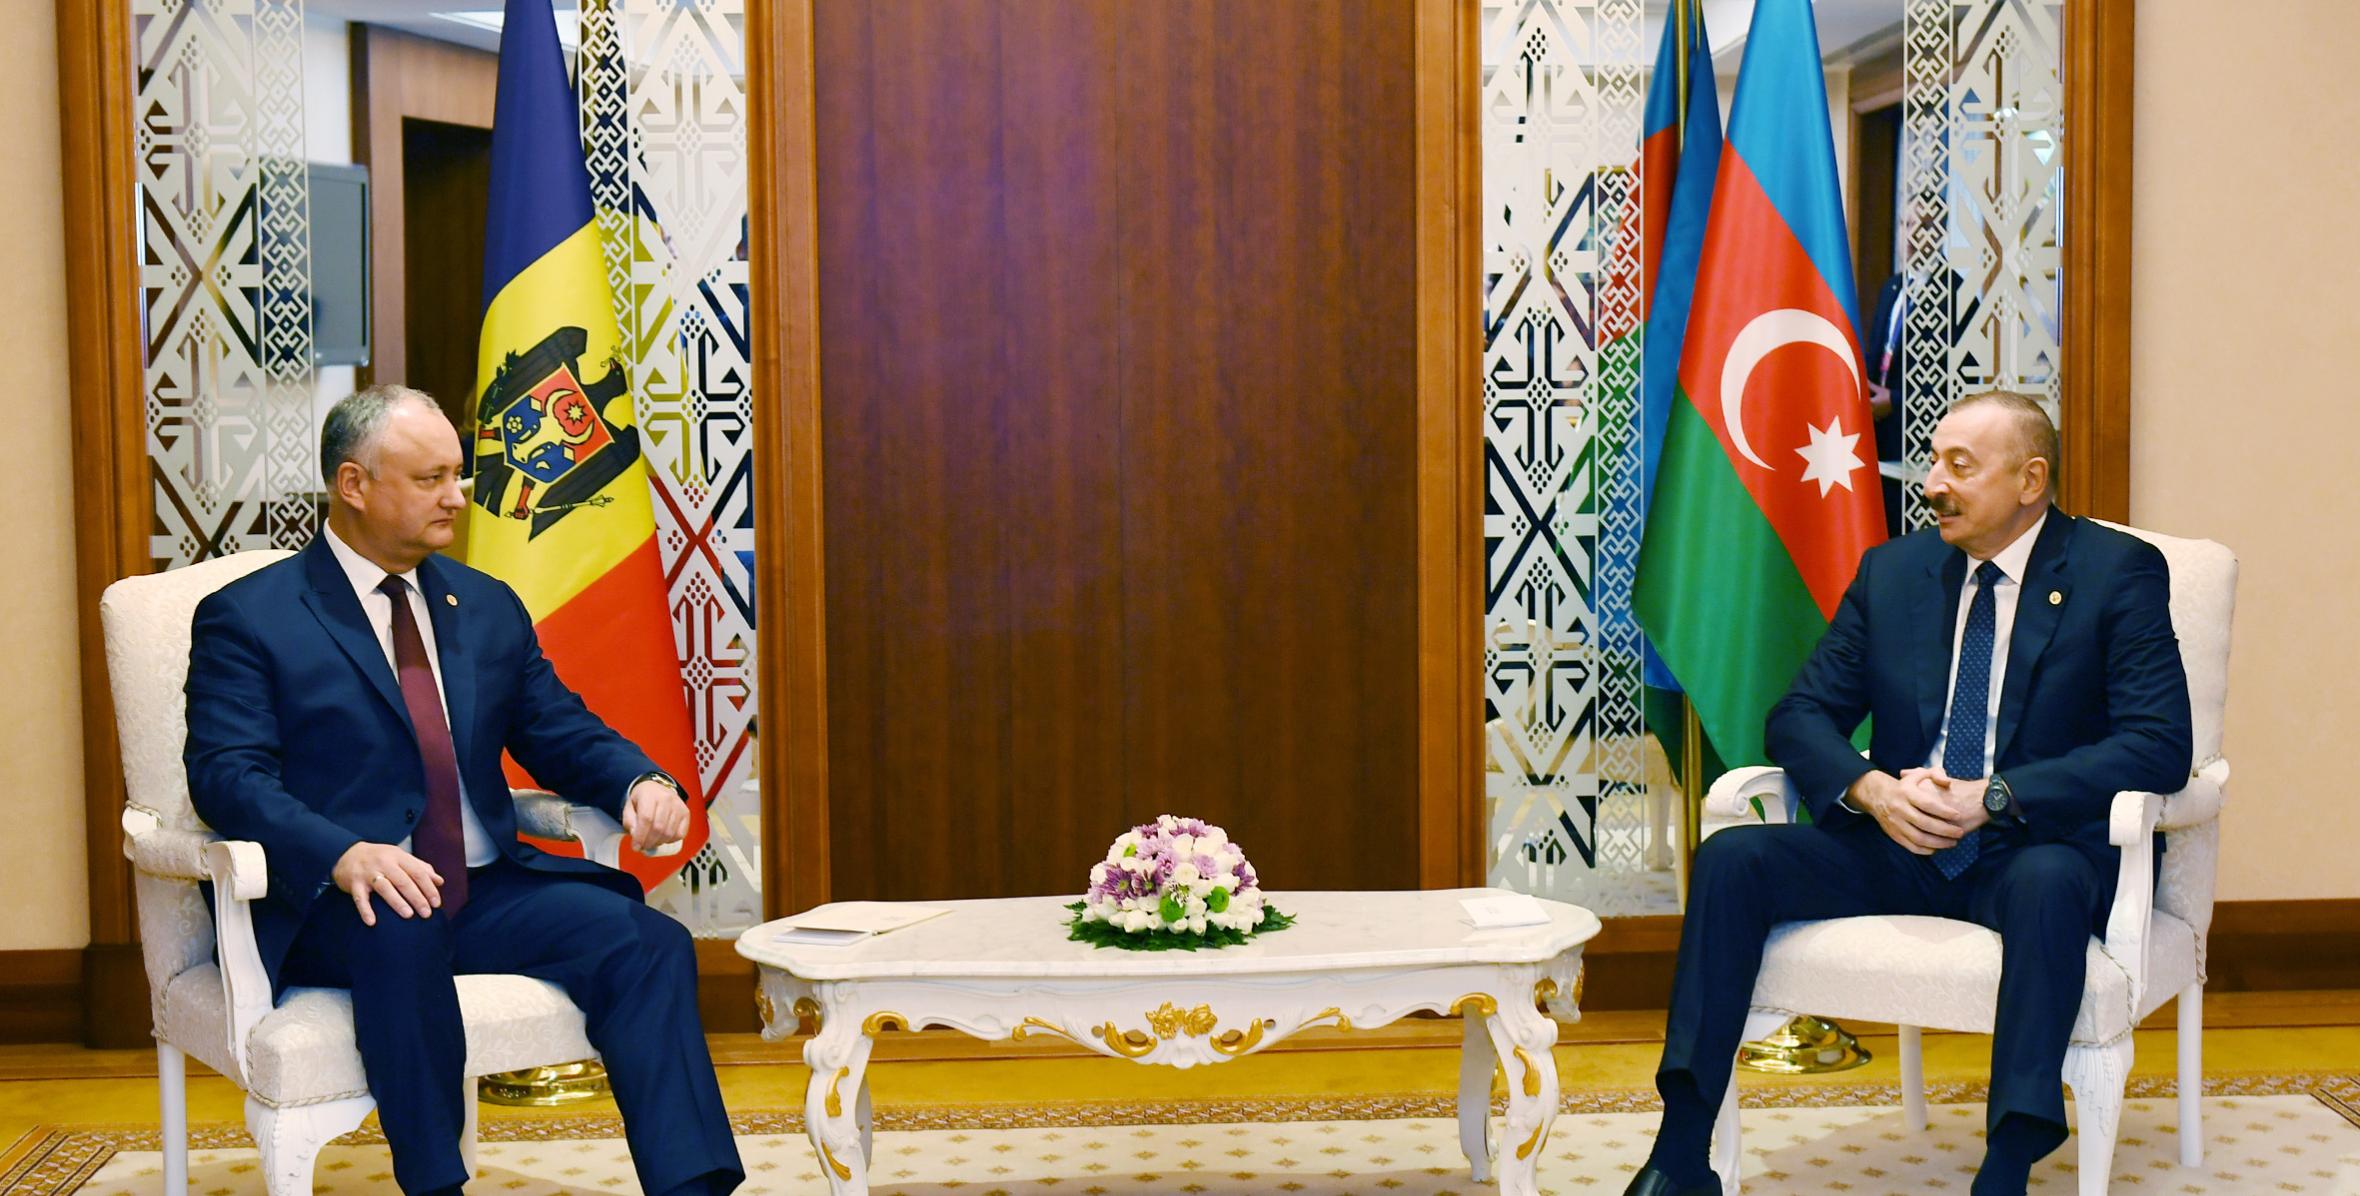 Ilham Aliyev met with Moldovan President Igor Dodon